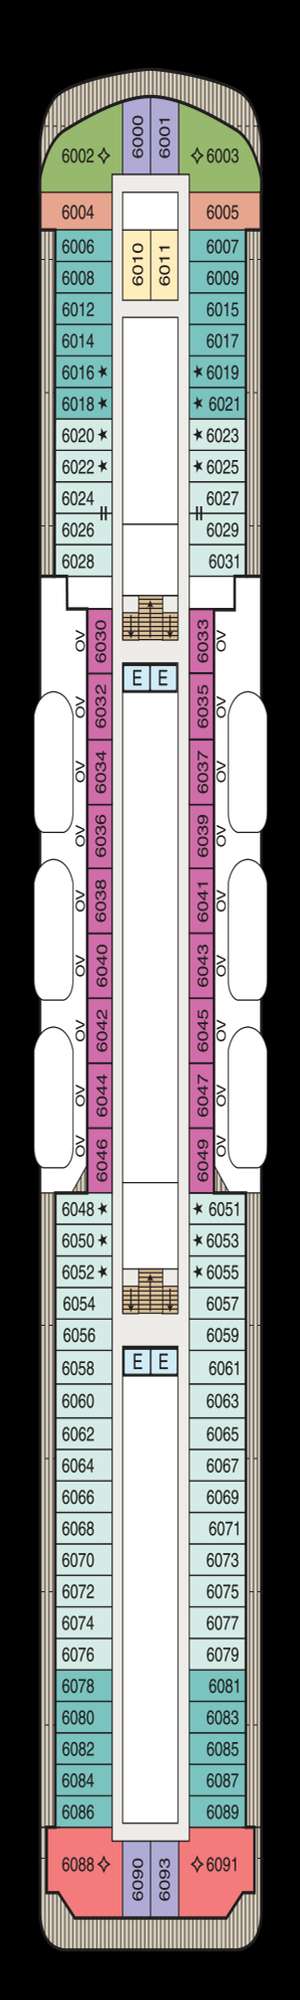 Deck plan for Regatta